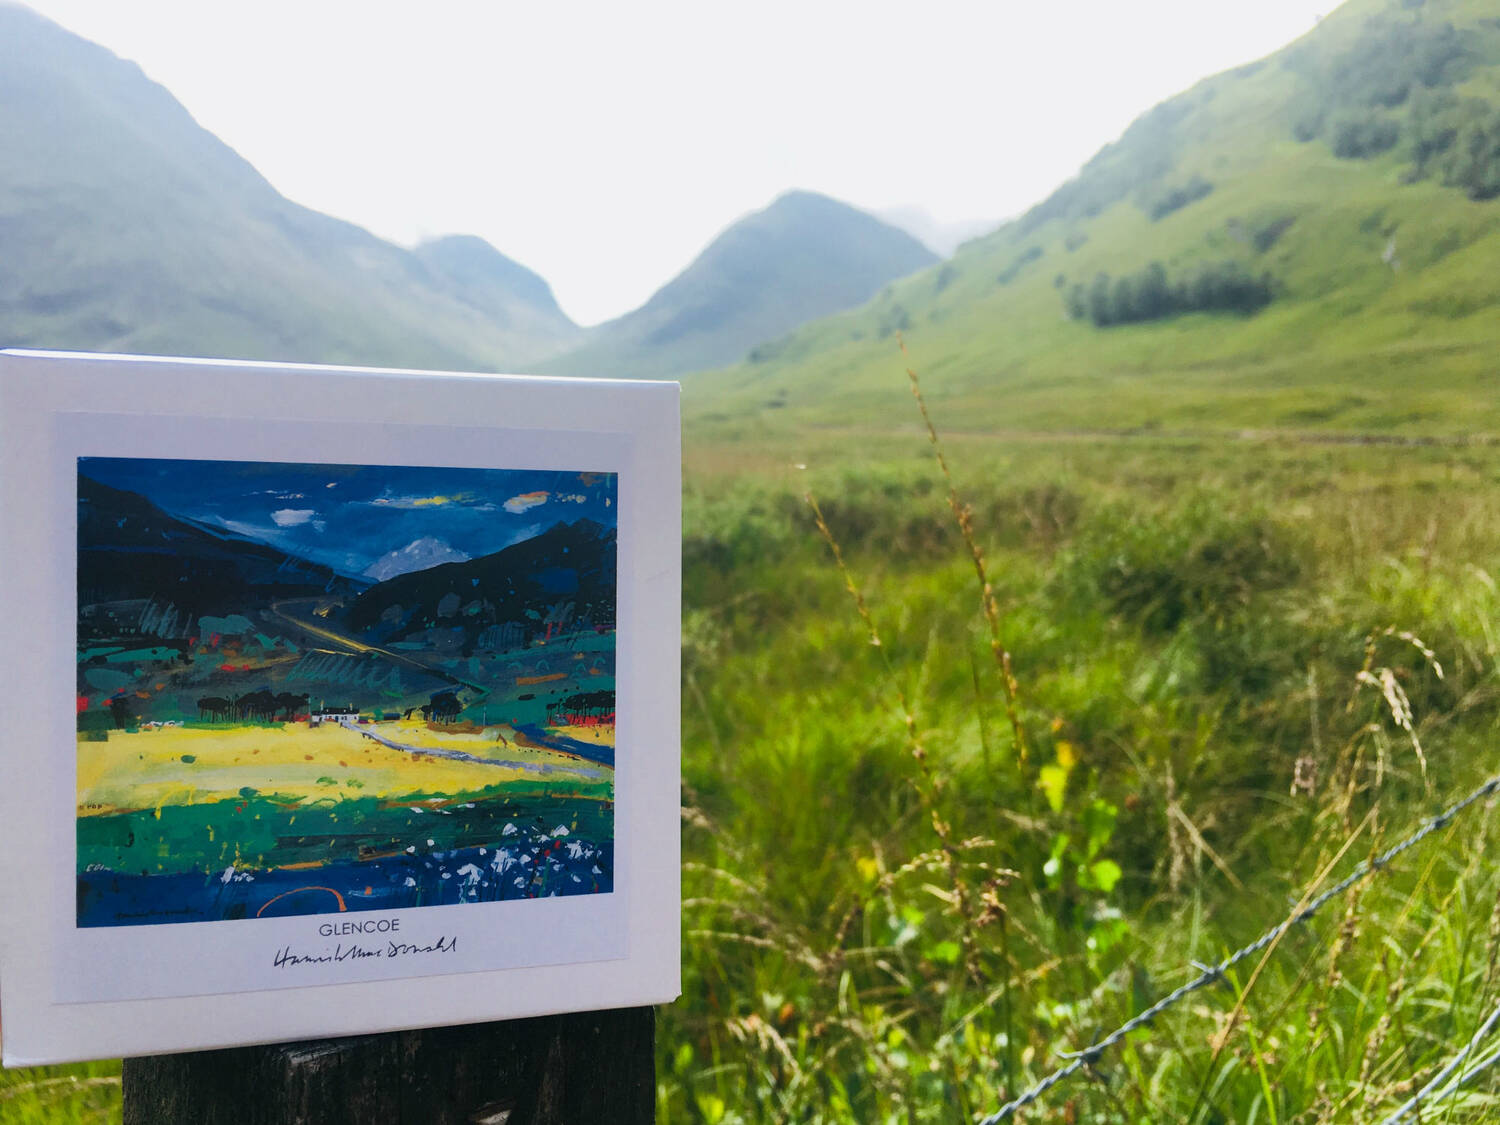 Hamish MacDonald’s painting of Glencoe, set in the newly designated National Nature Reserve